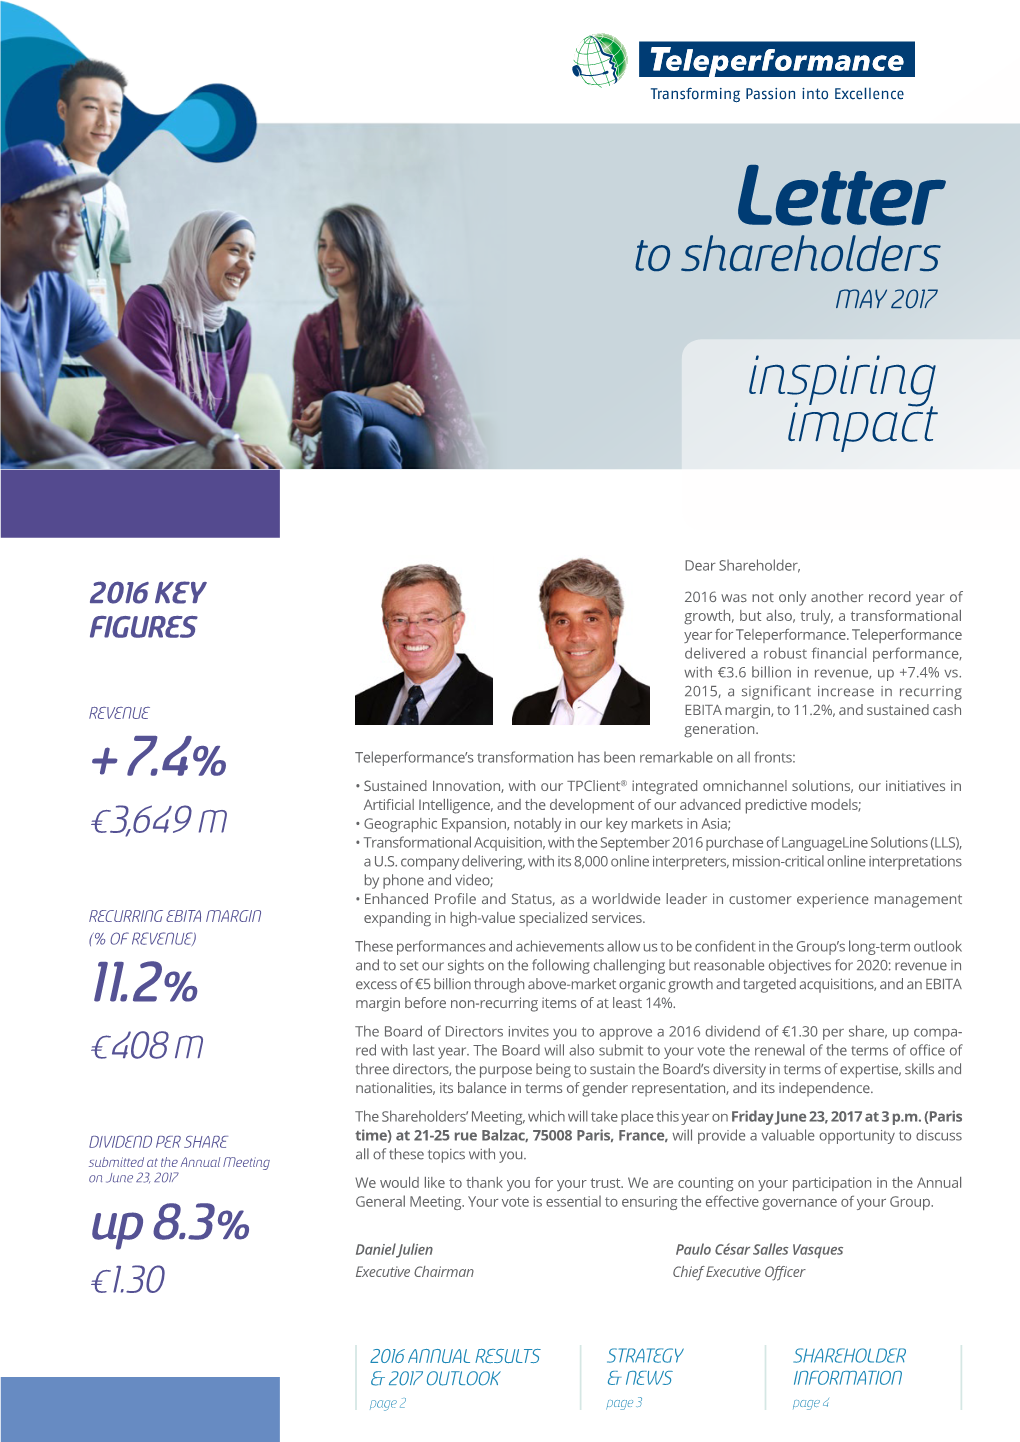 Letter to Shareholders MAY 2017 Inspiring Impact